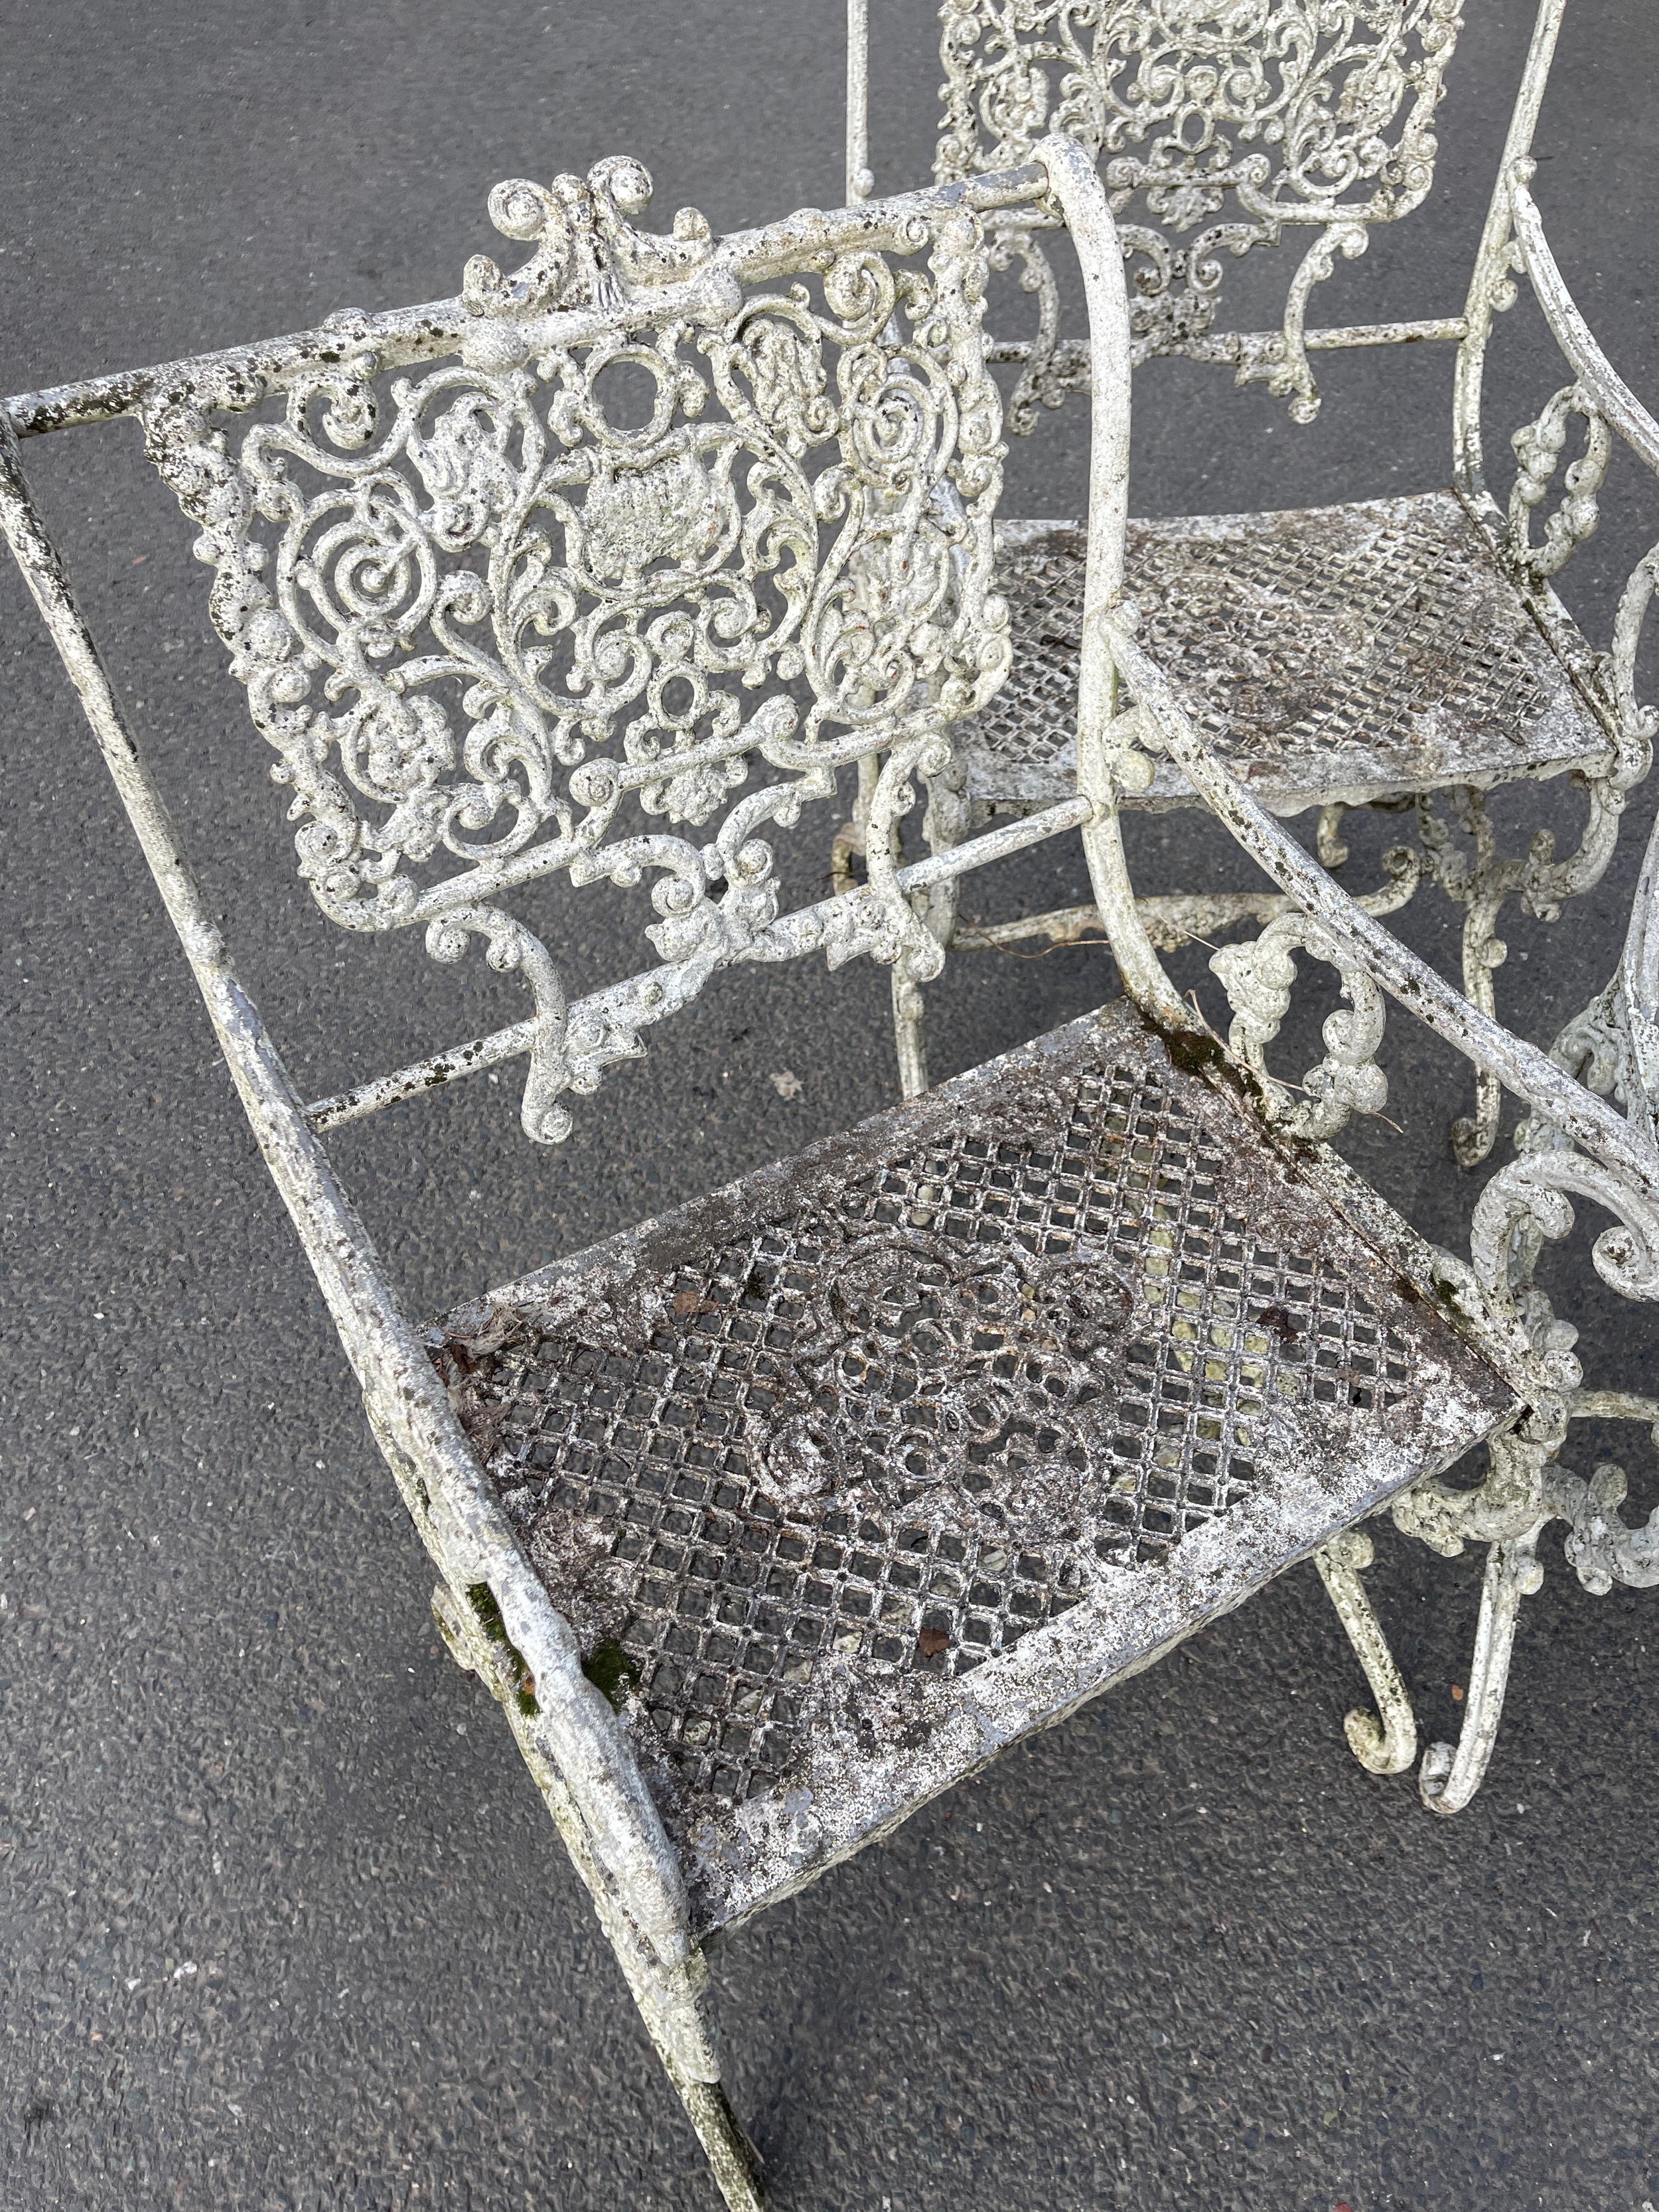 Three vintage iron garden chairs - Image 2 of 4